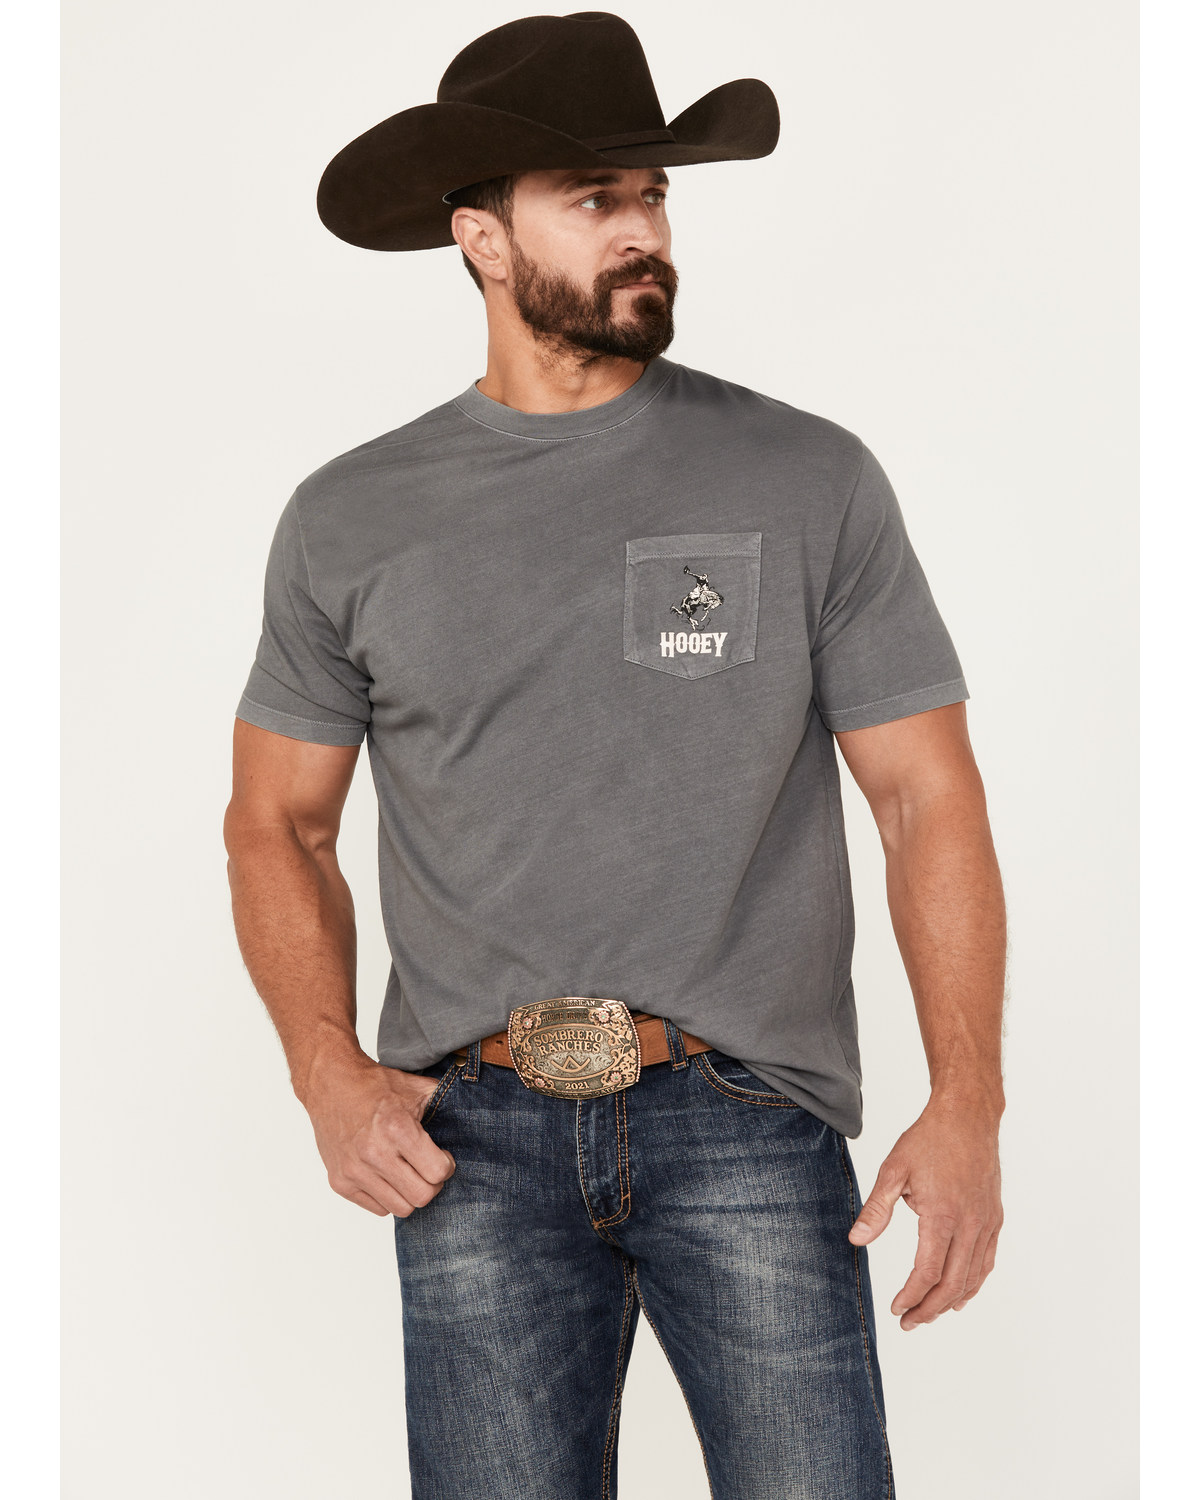 Hooey Men's Cheyenne Short Sleeve Graphic T-Shirt